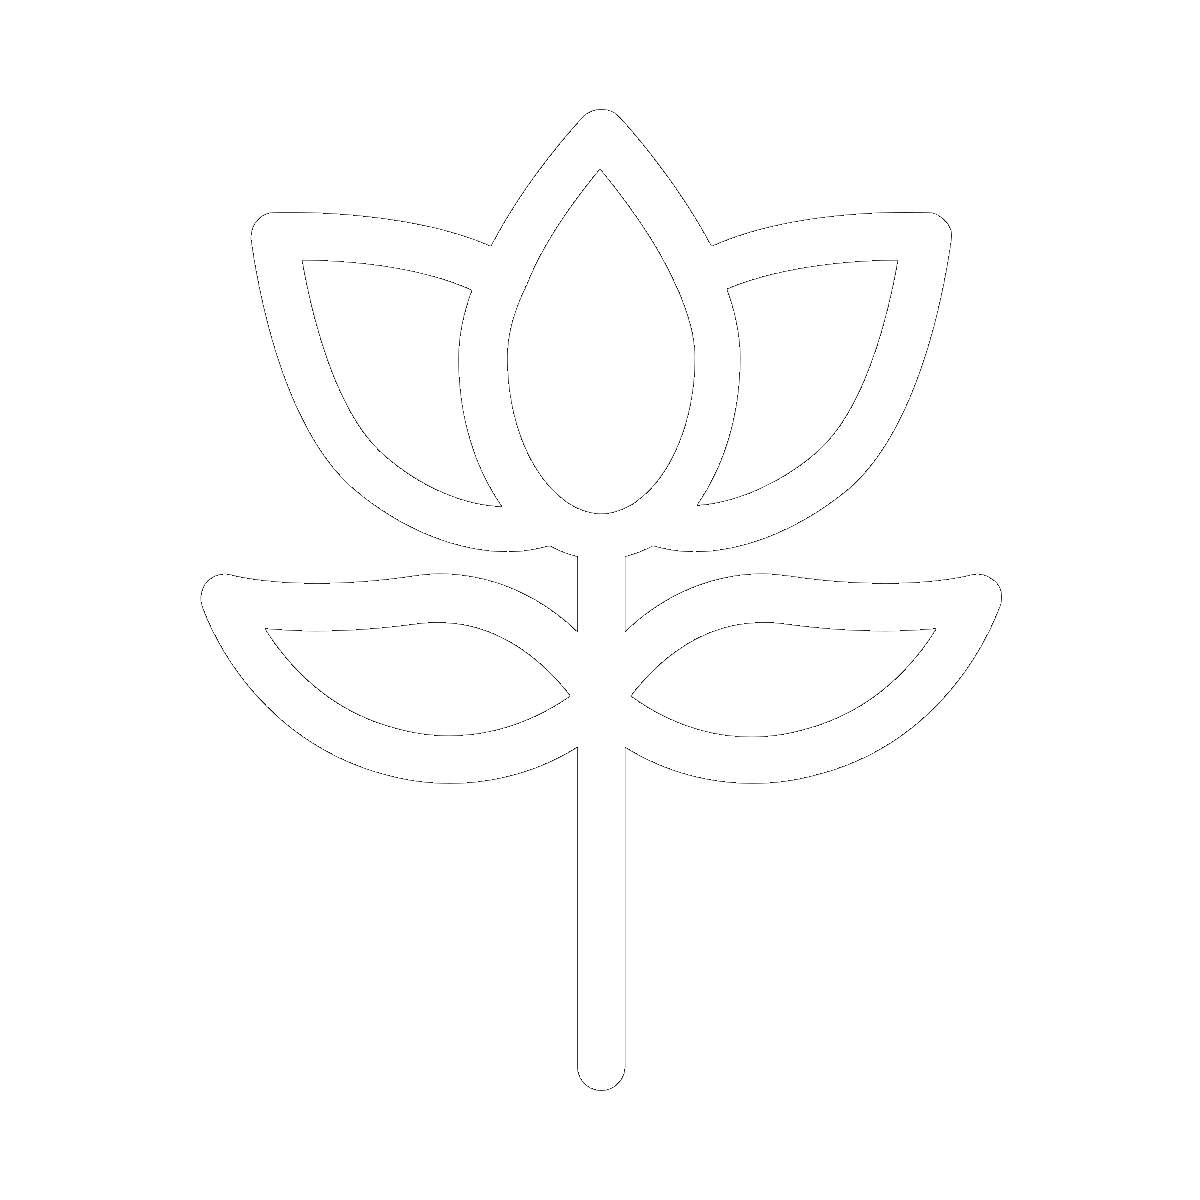 Symbol The Flower